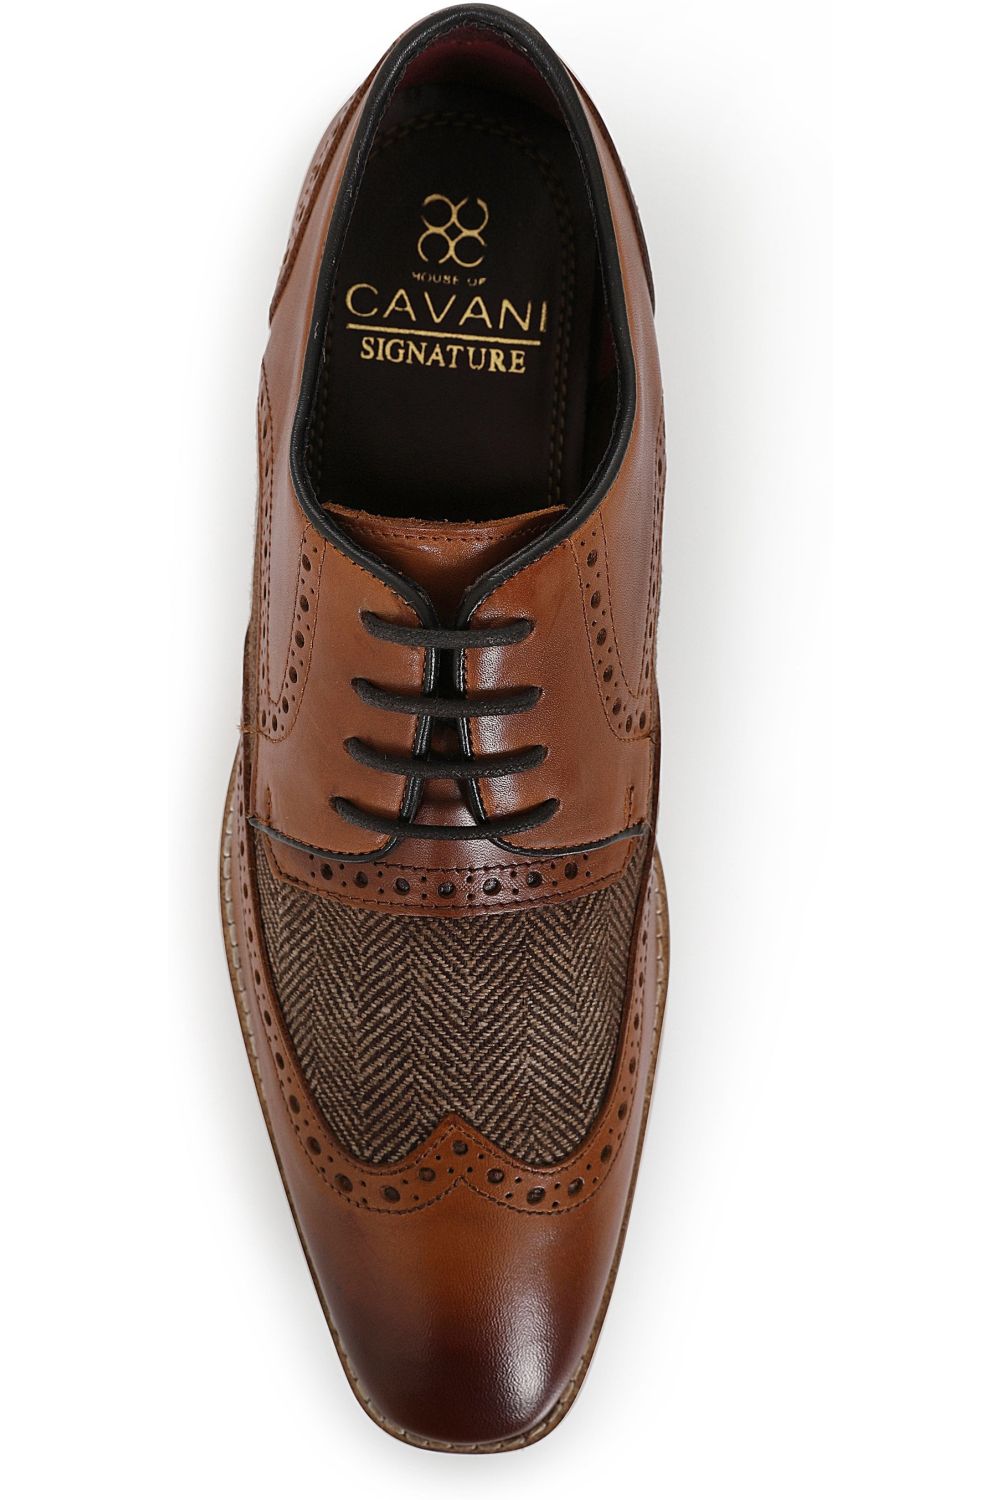 Cavani William Tan tweed Brogue Leather shoe